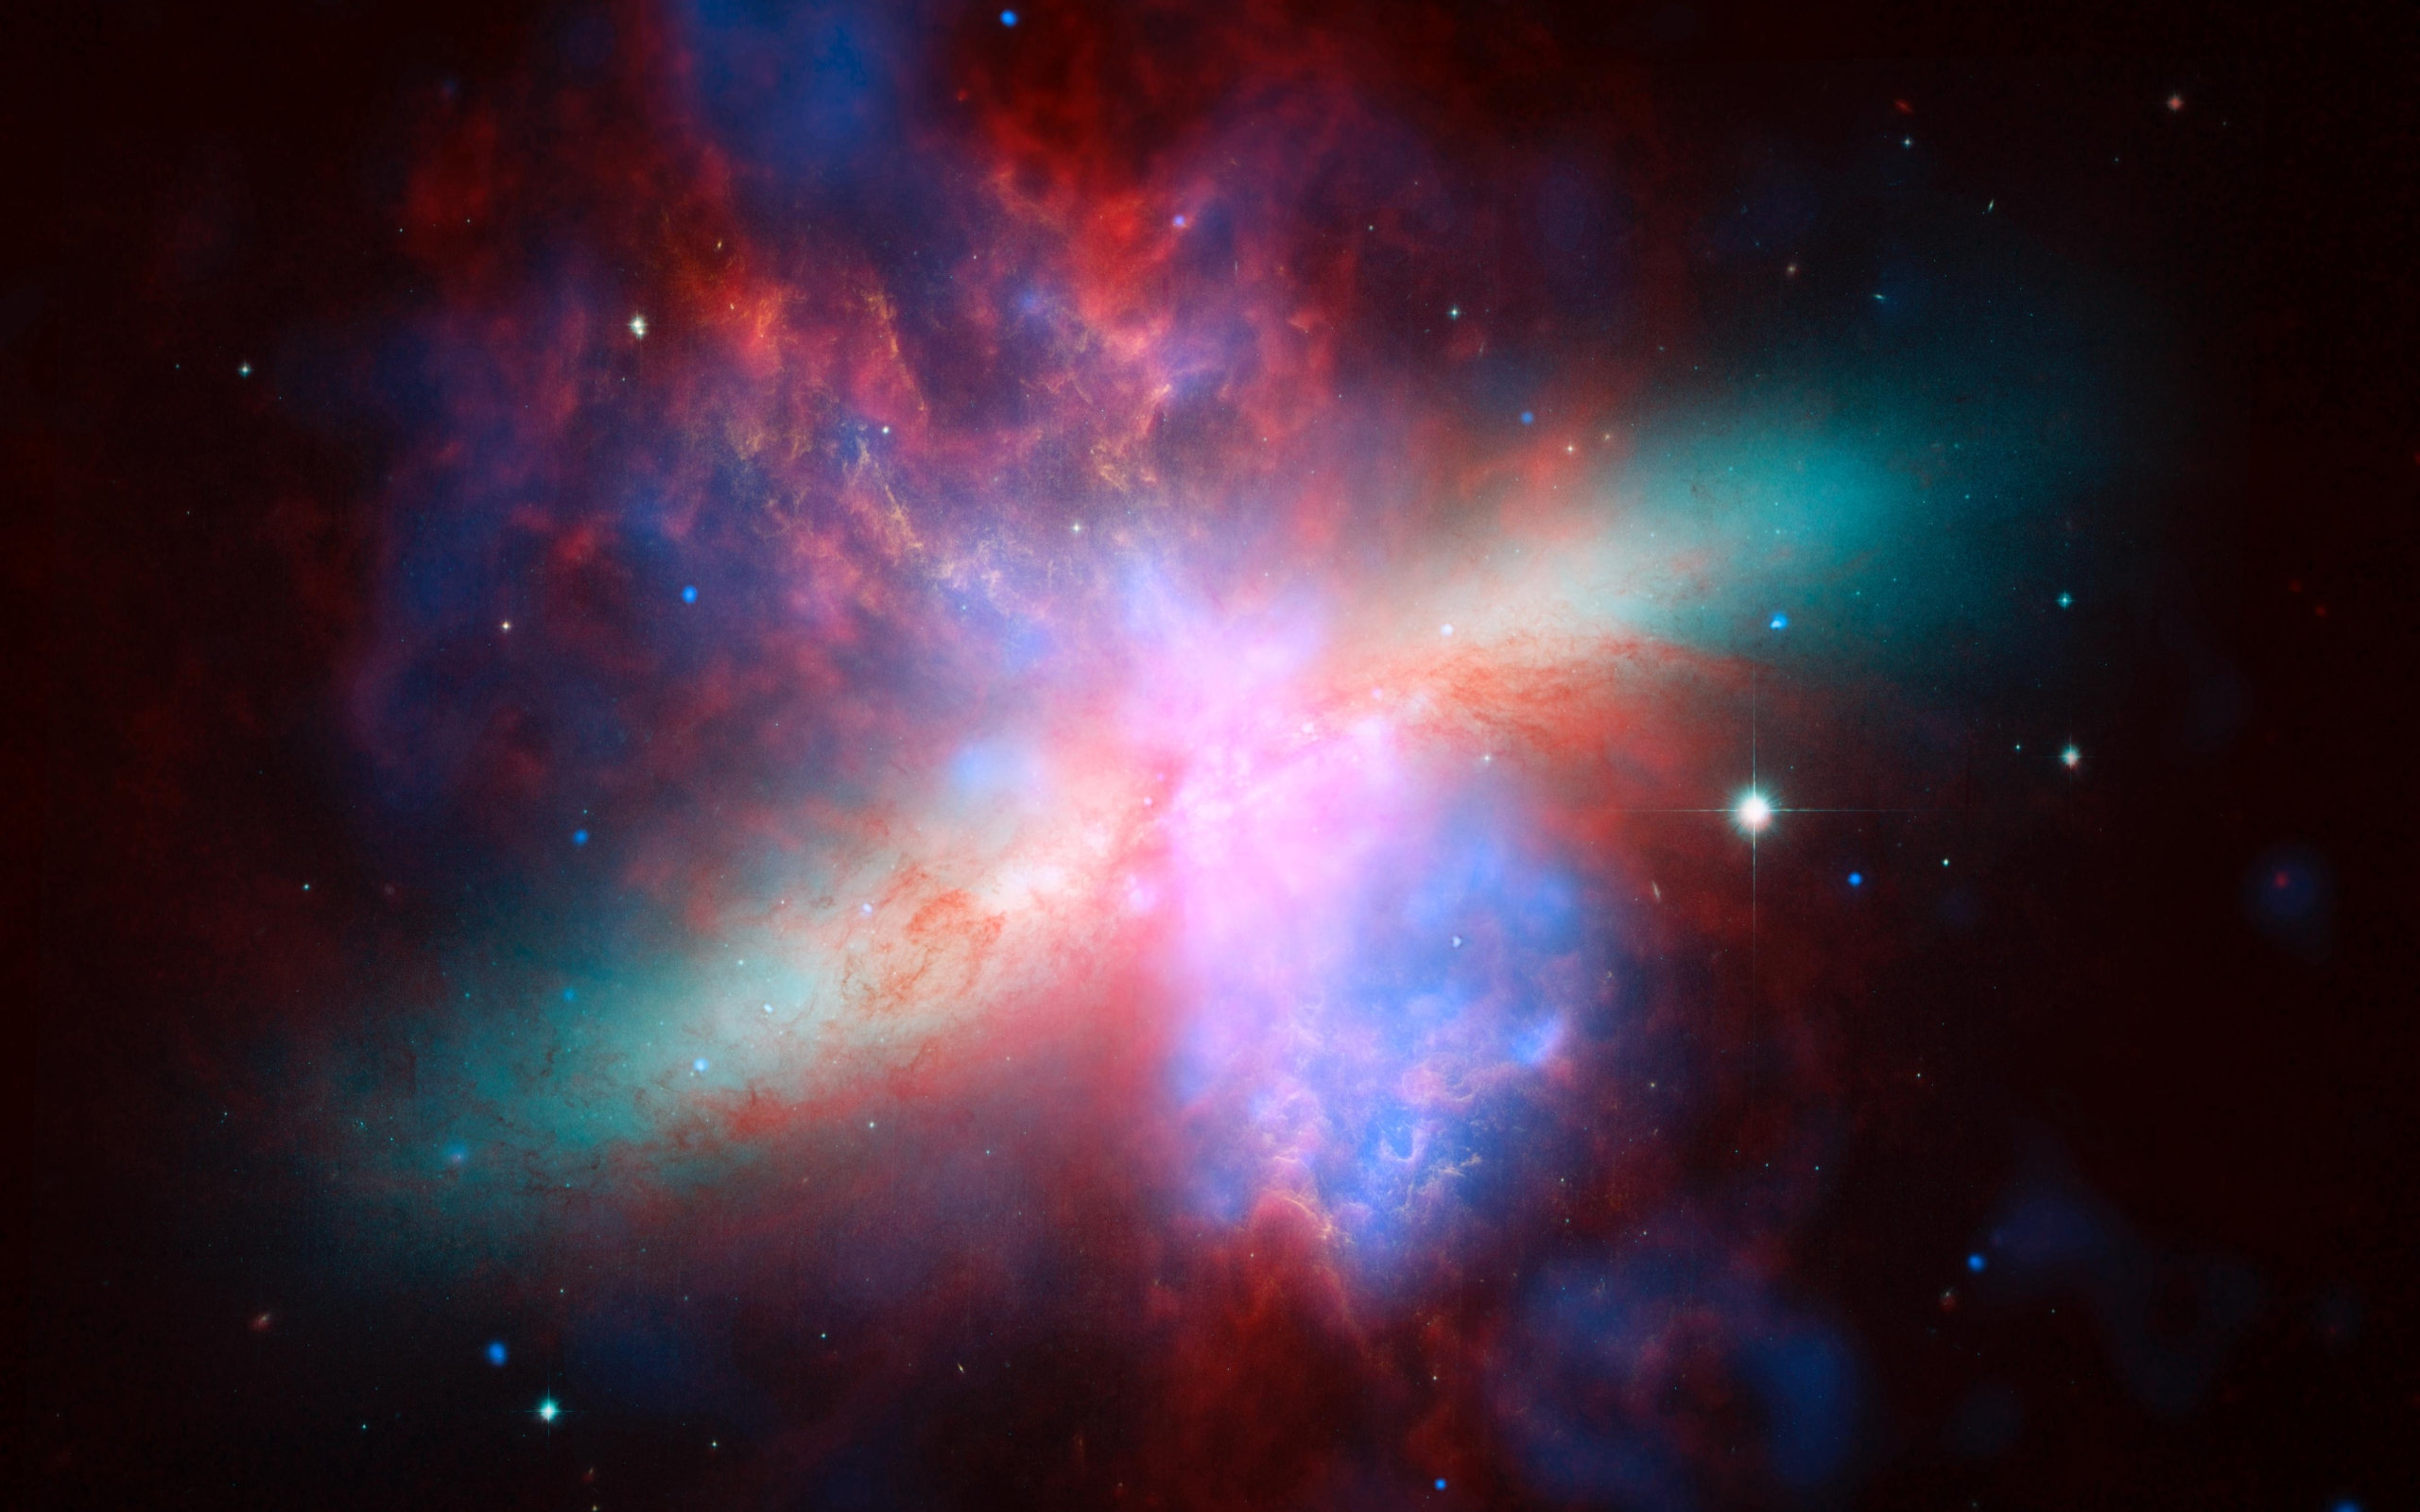 Space Nebula From Hubble Telescope Wallpaper Background